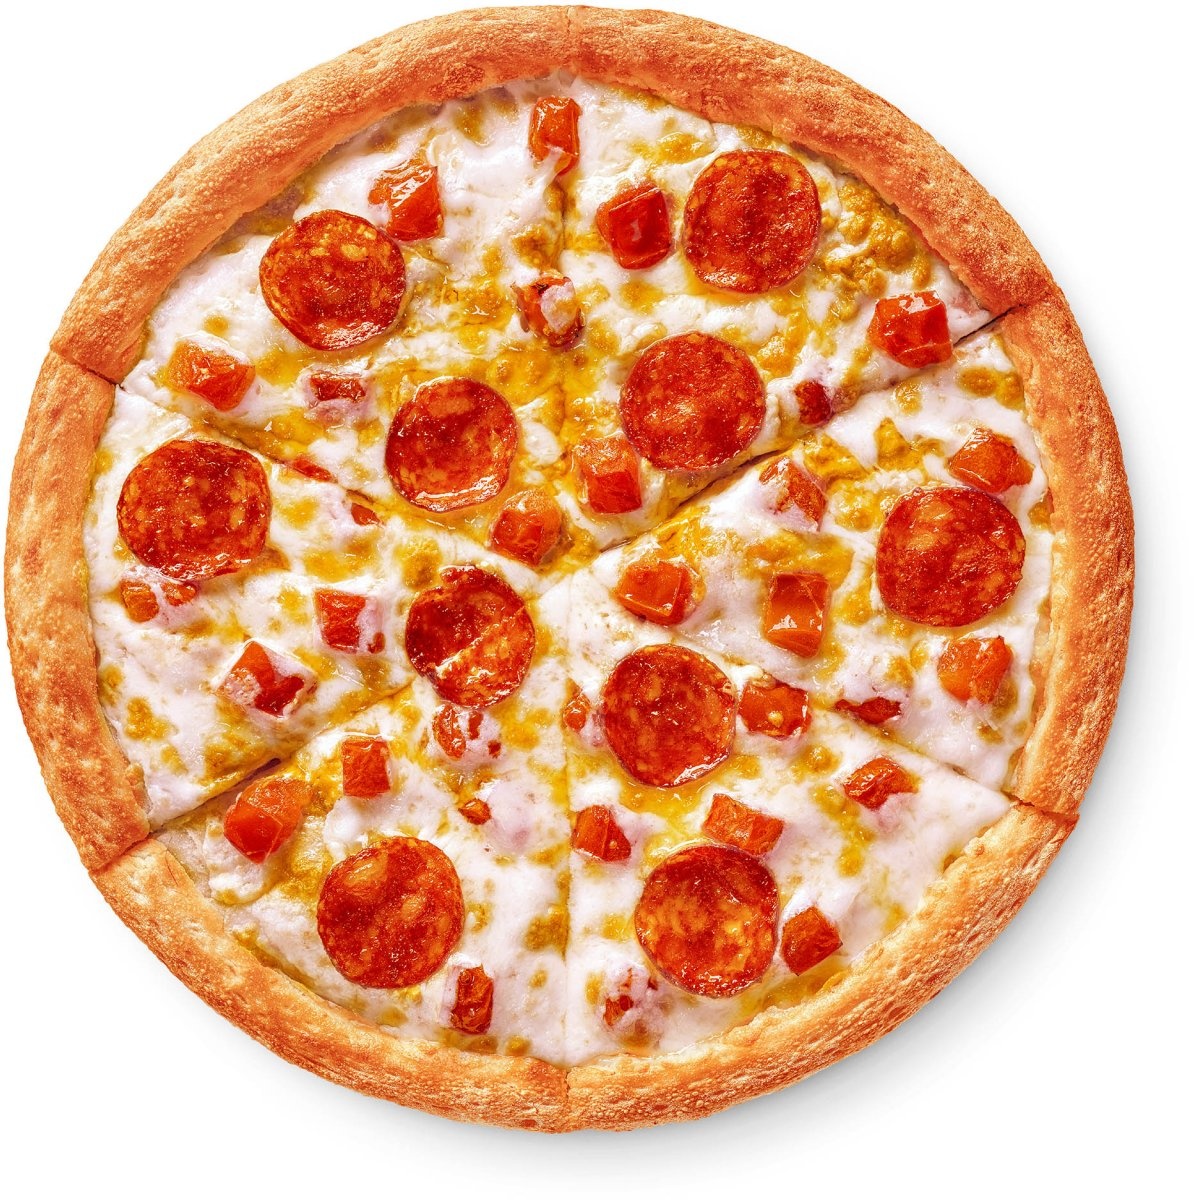 сколько стоит пицца пепперони в додо пицце фото 88